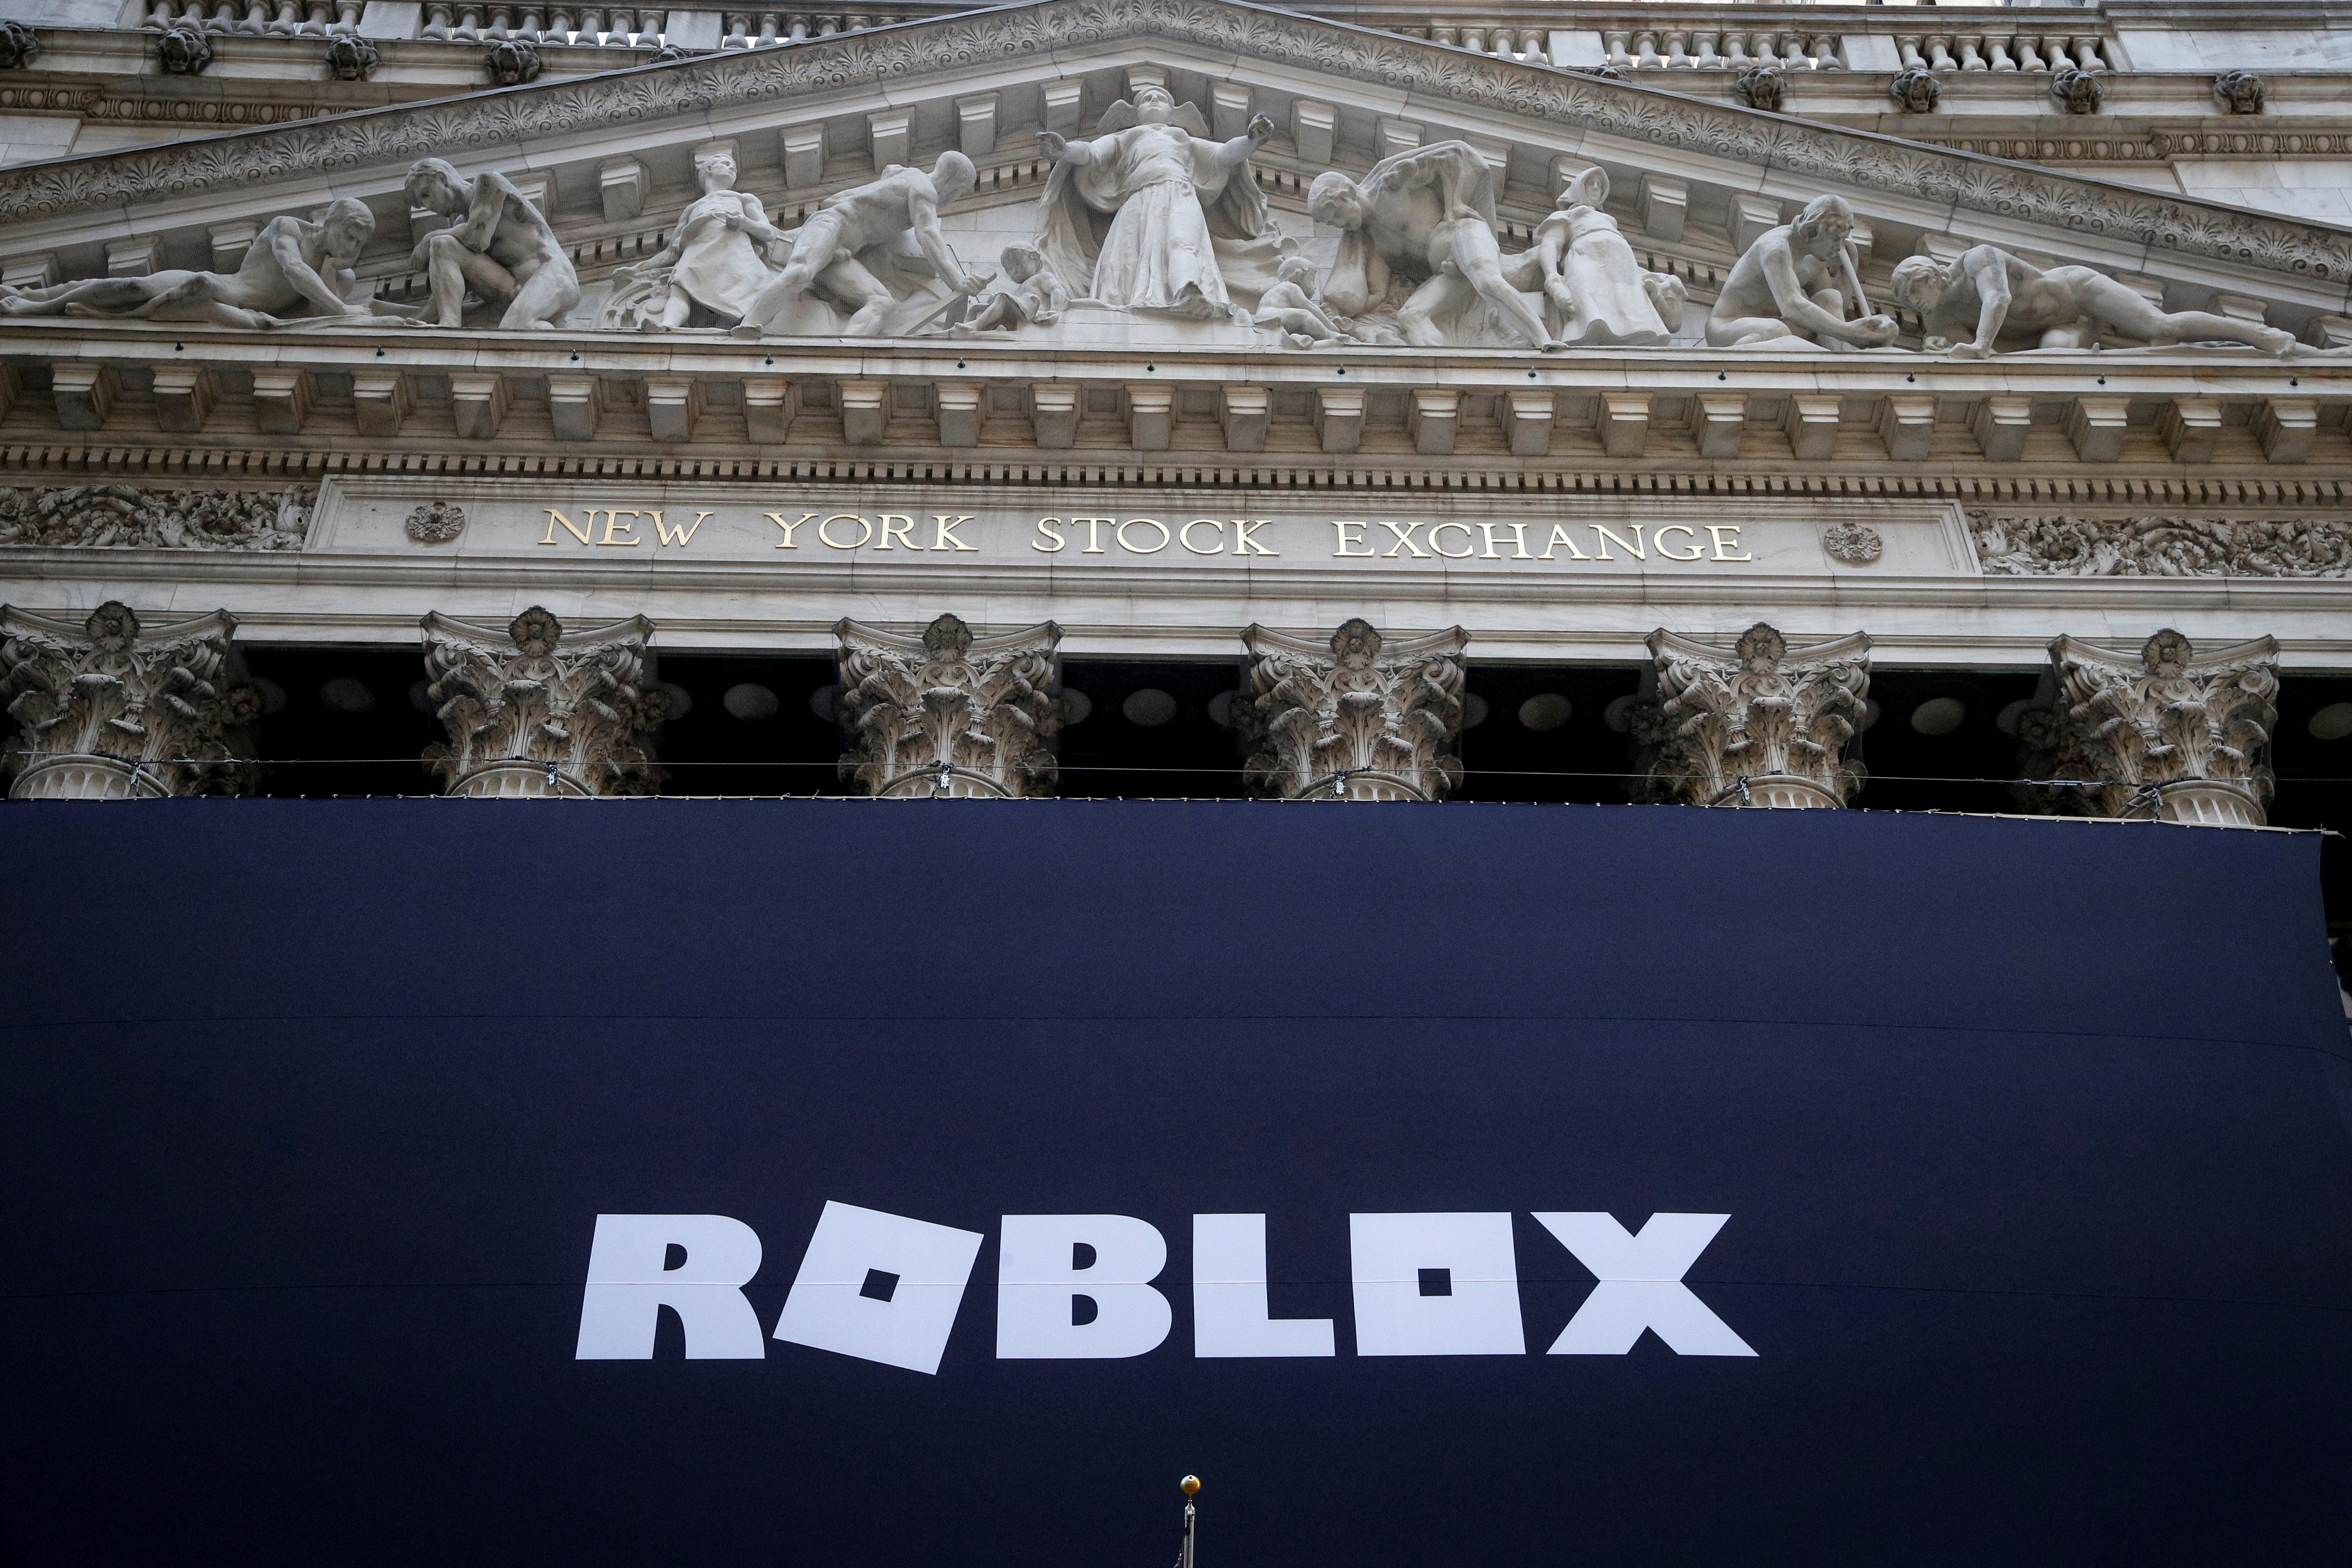 Roblox bookings beat as gaming boom persists, shares surge